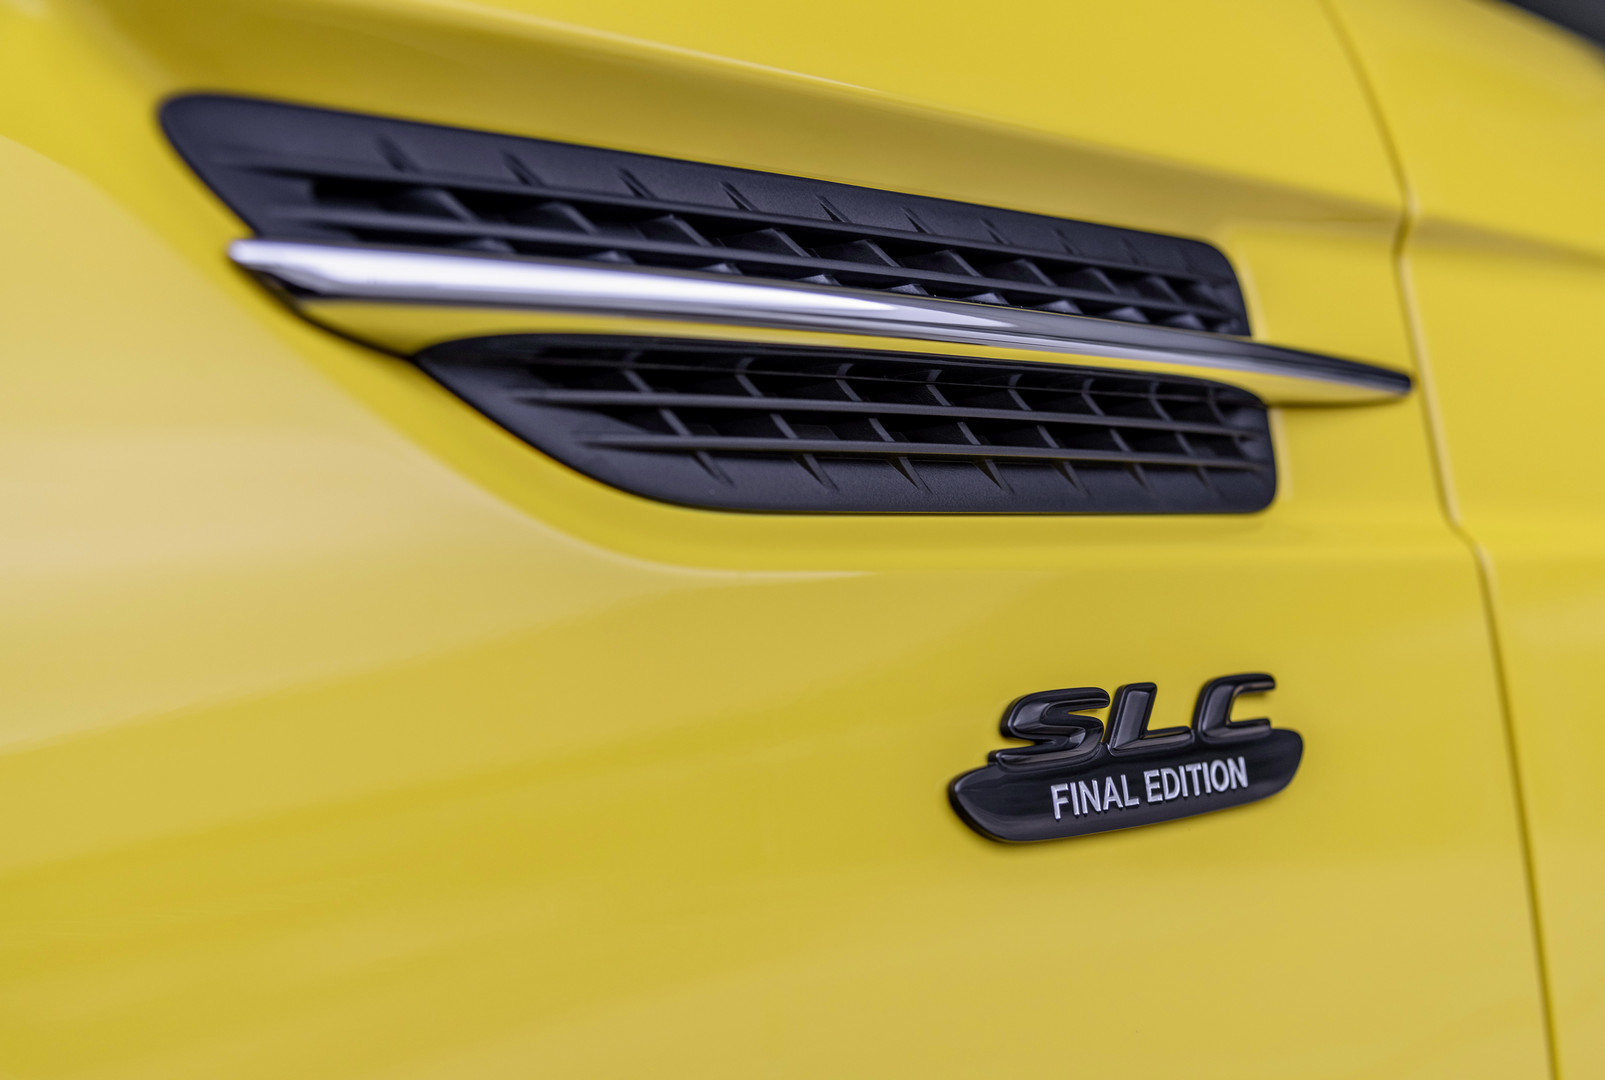 Merdeces-Benz SLC Final Edition